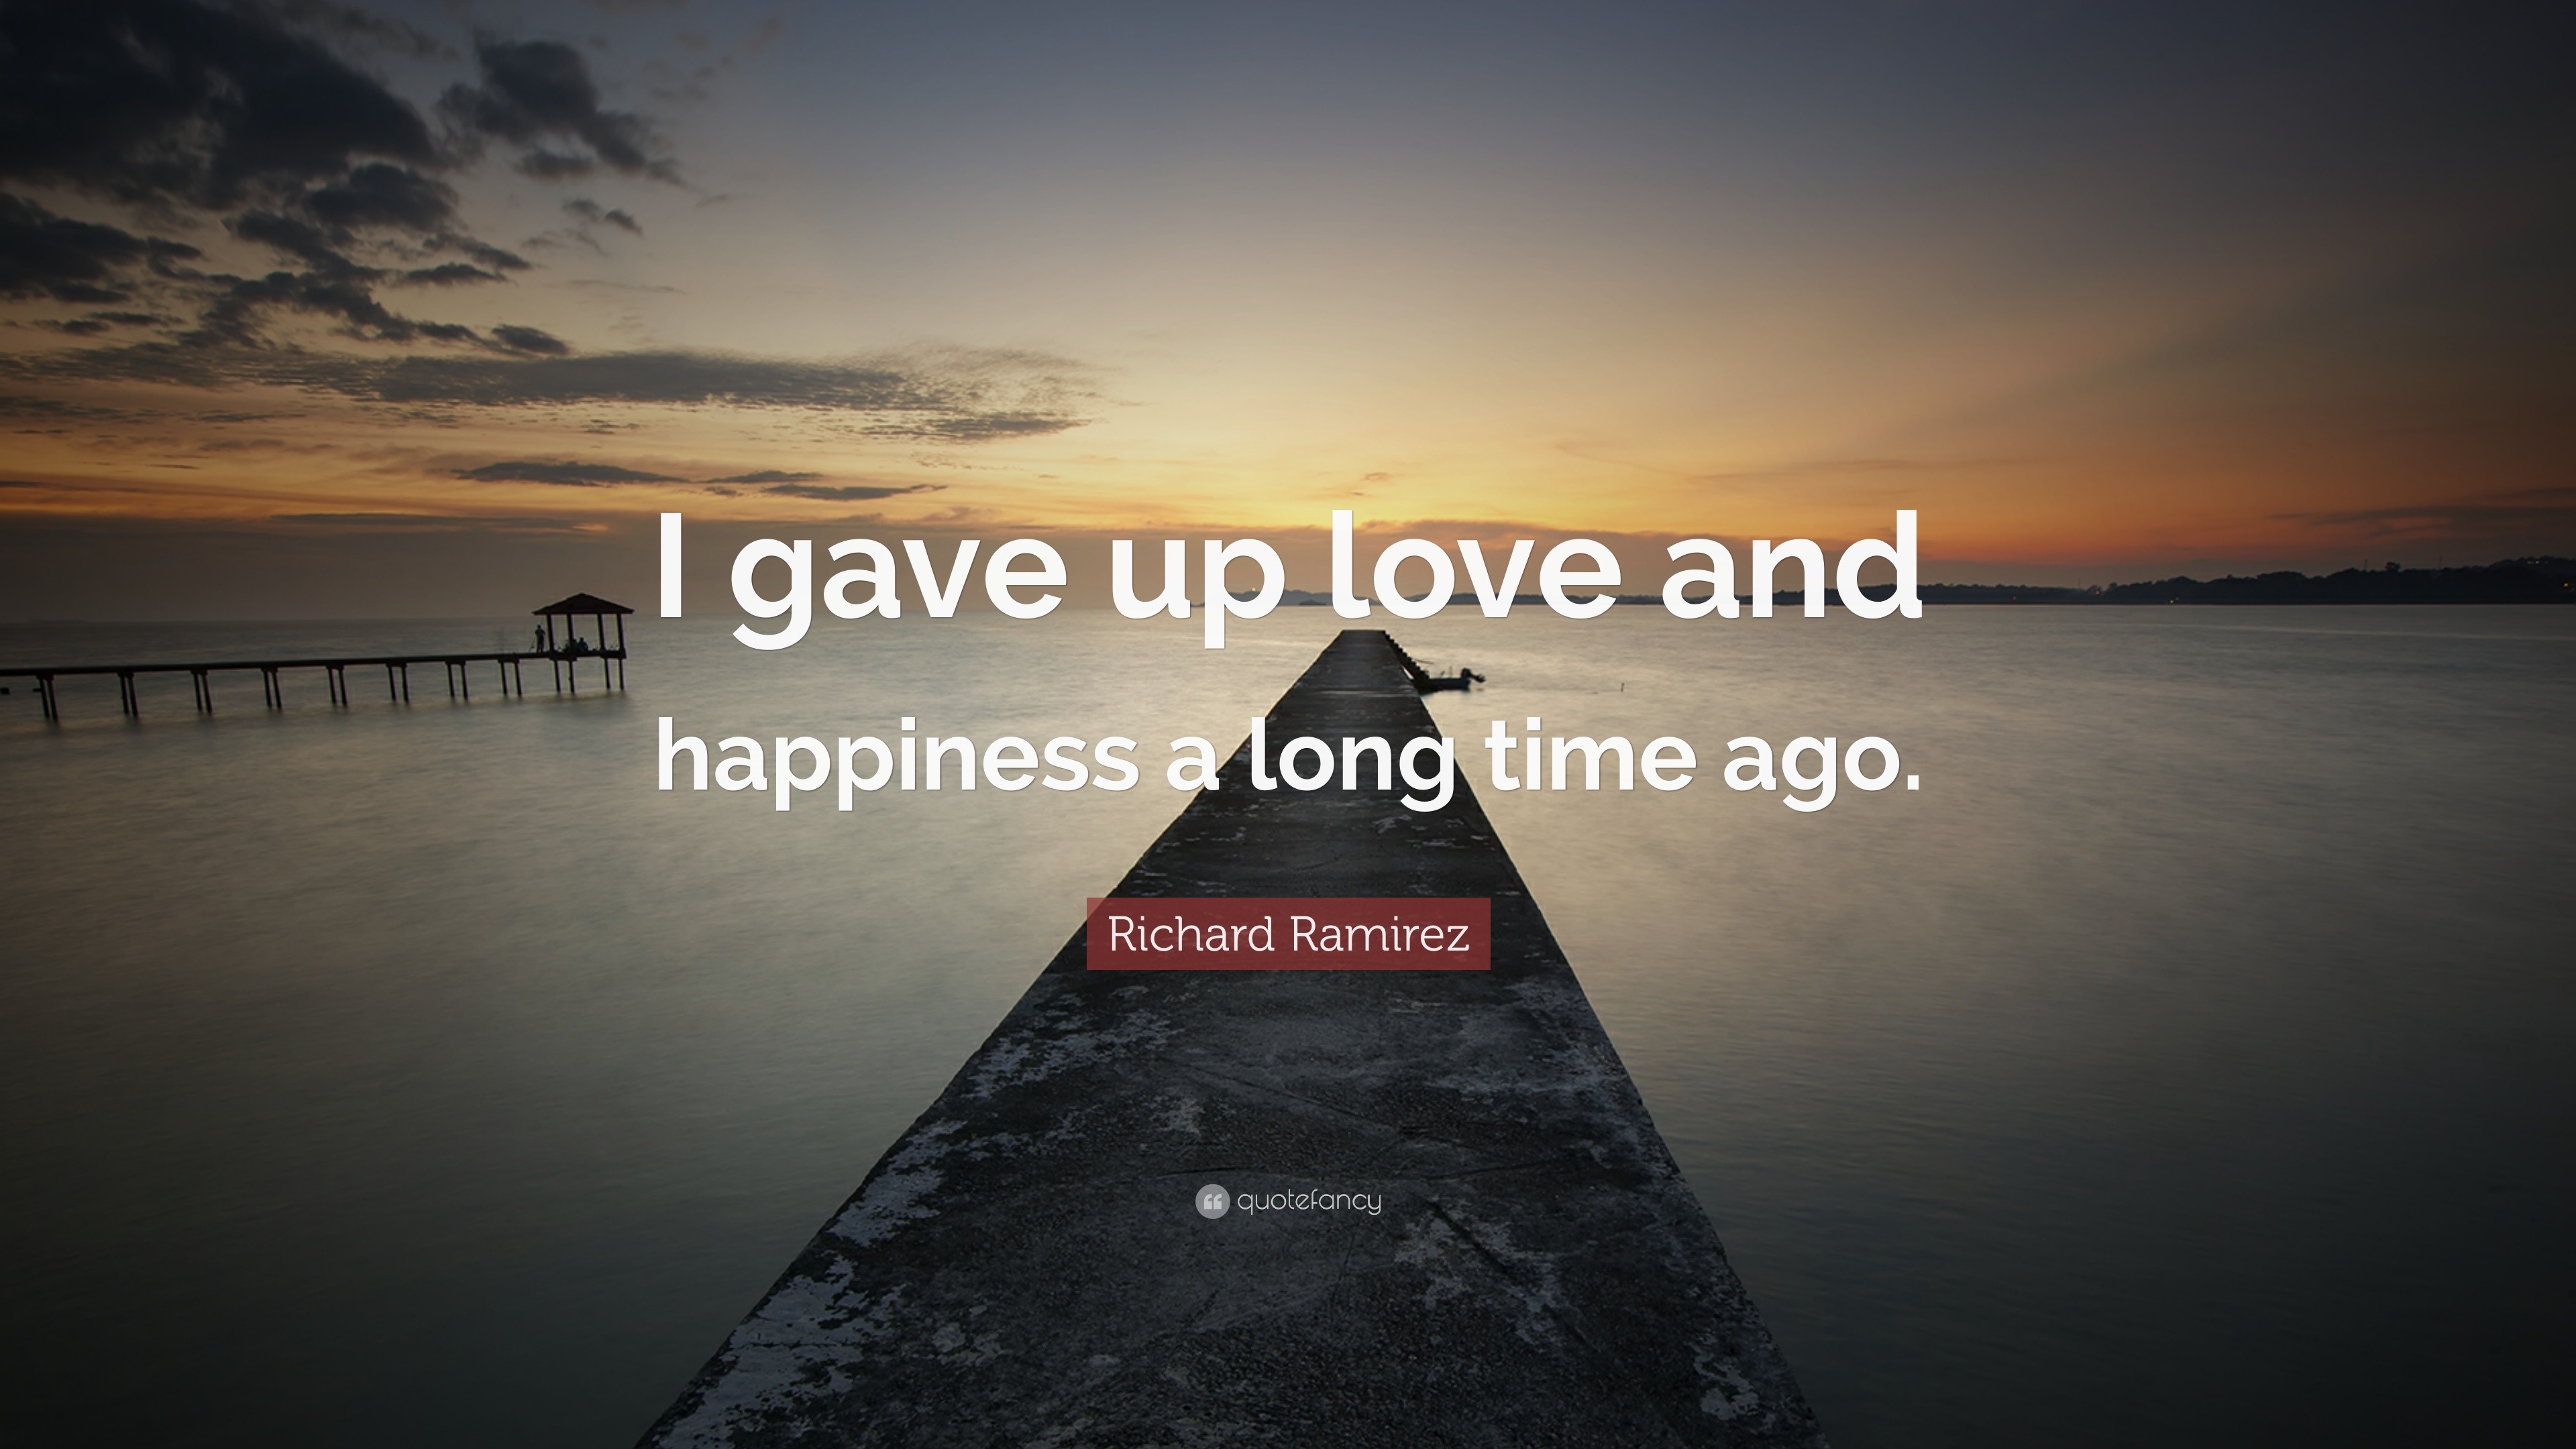 Richard Ramirez “I gave love and happiness a long time ago.”